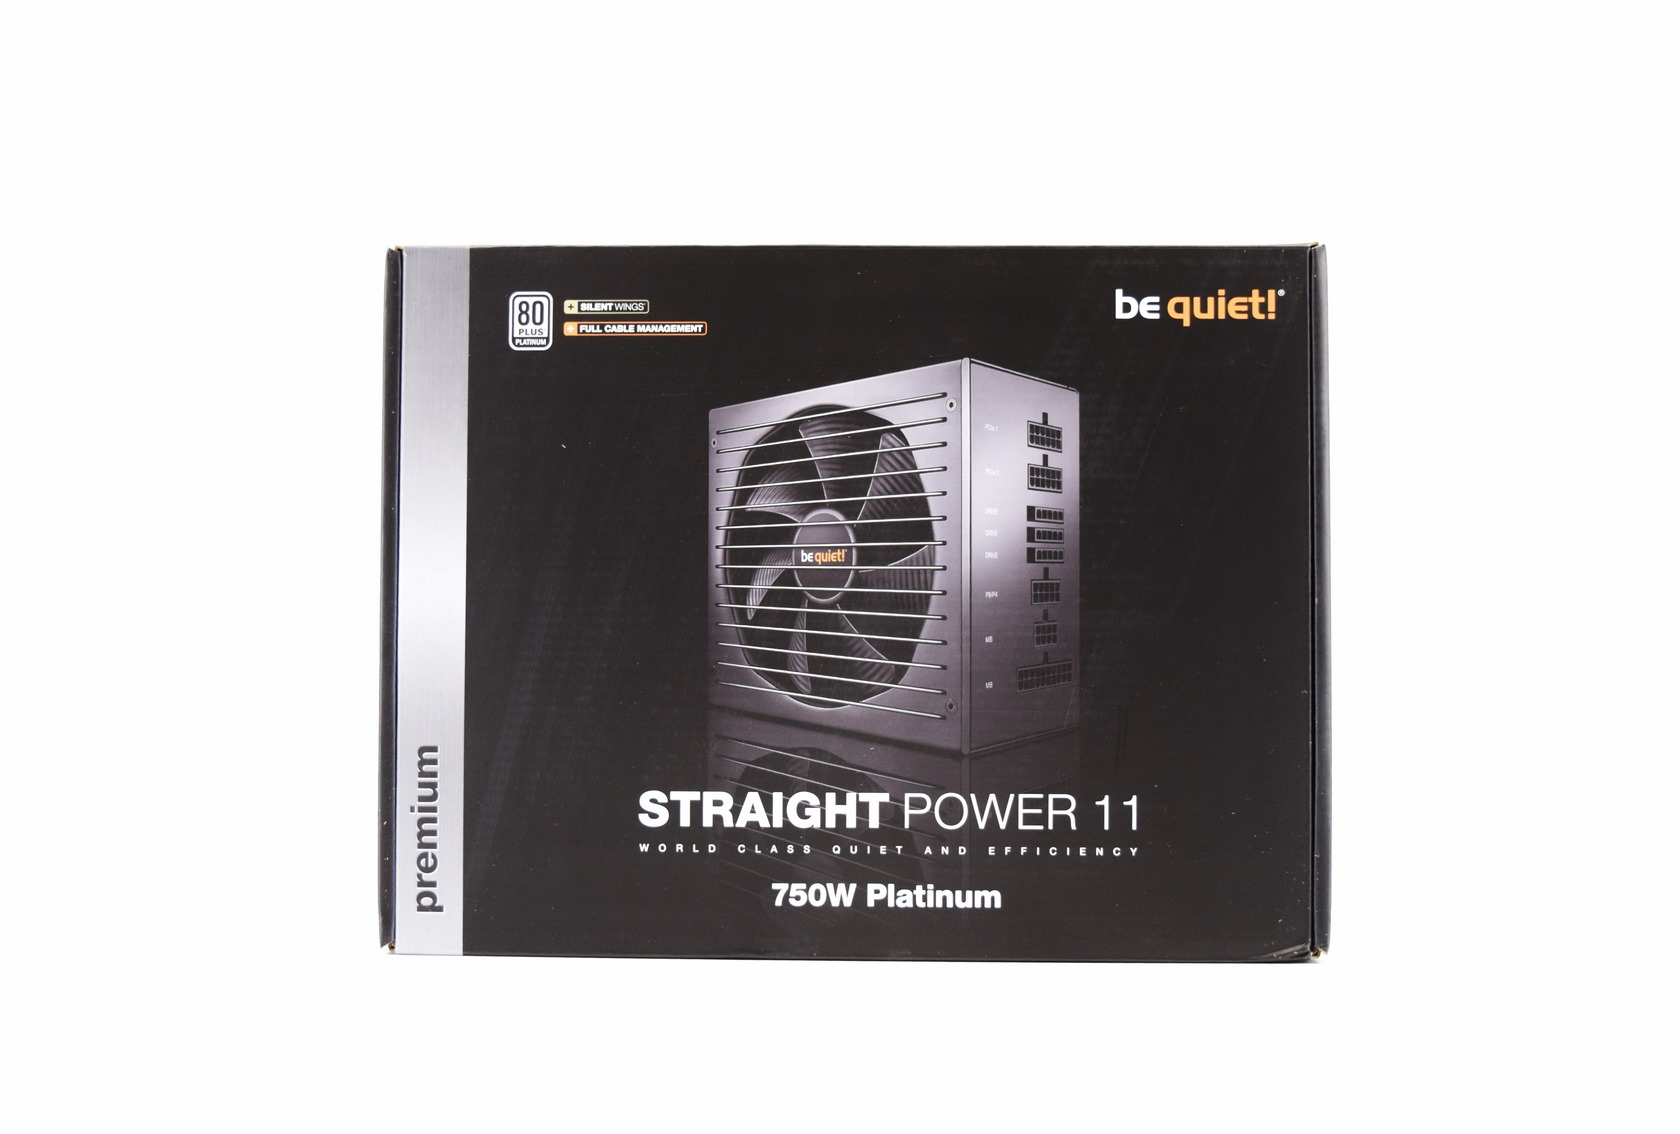 be quiet! Straight Power 11 Platinum PSU review